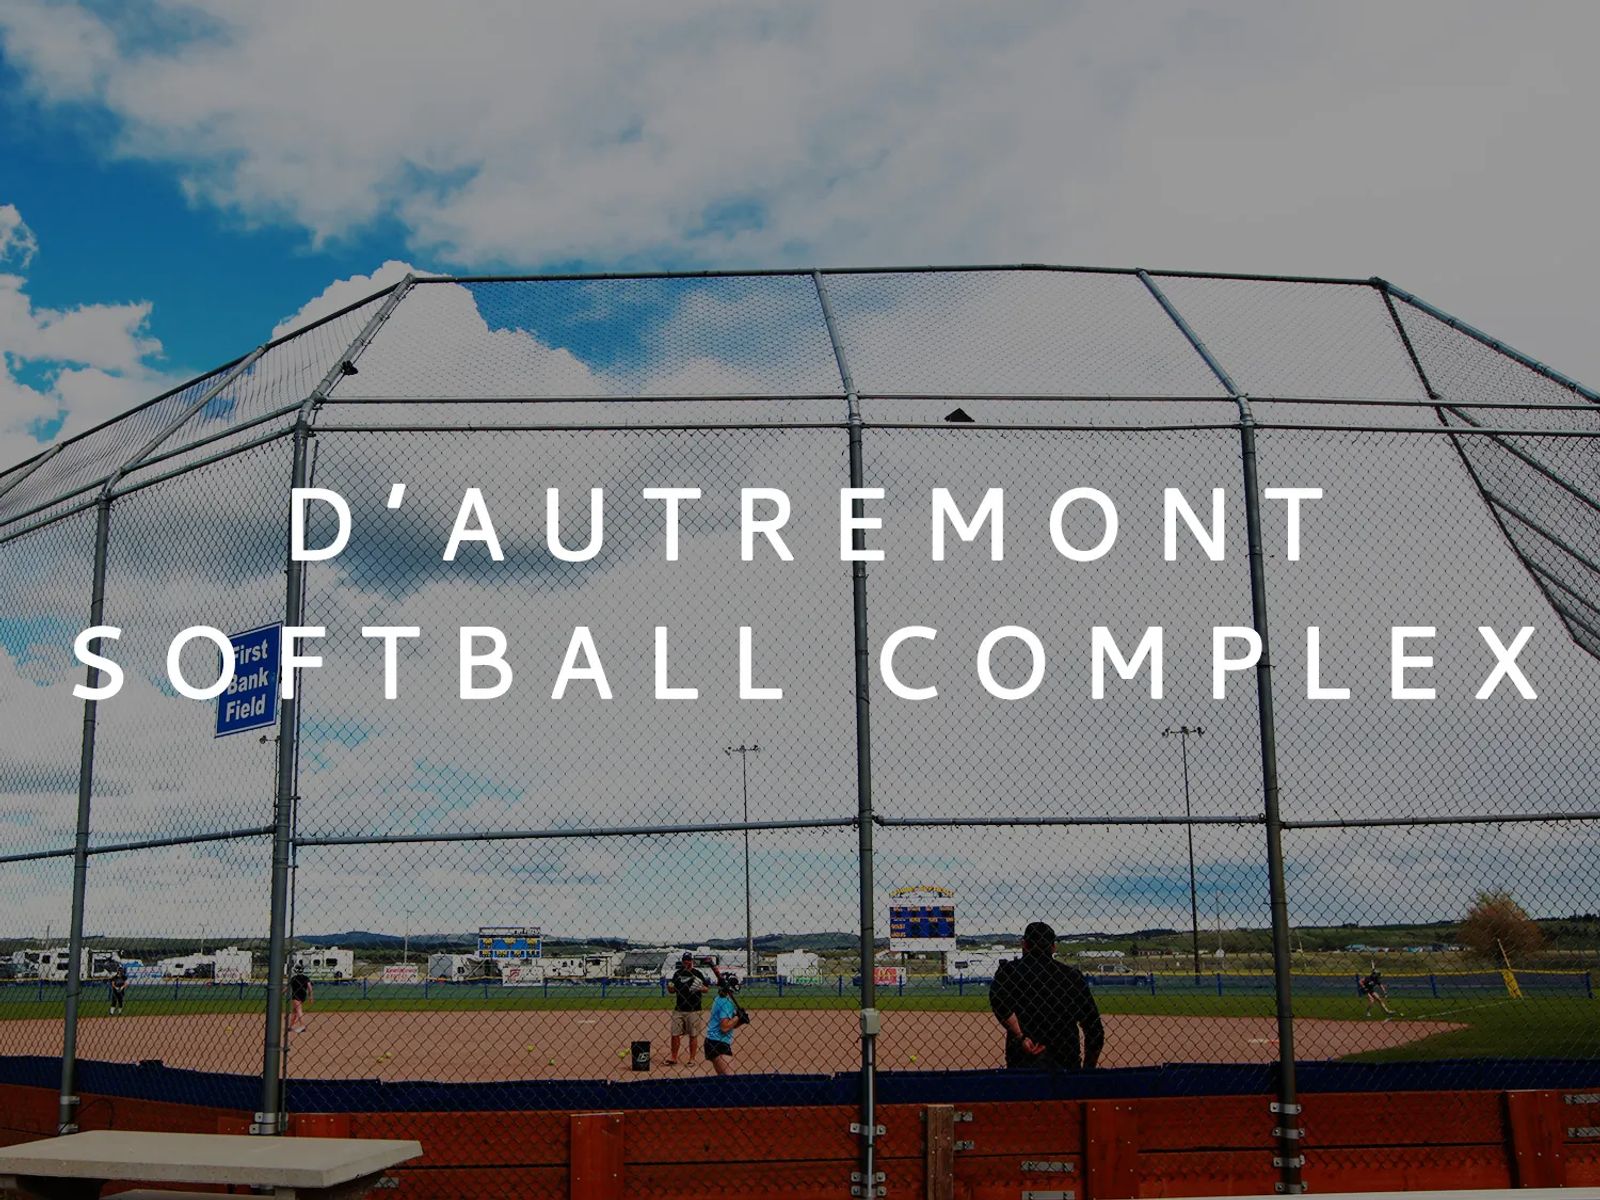 D'Autremont Softball Complex in Lewistown, Montana